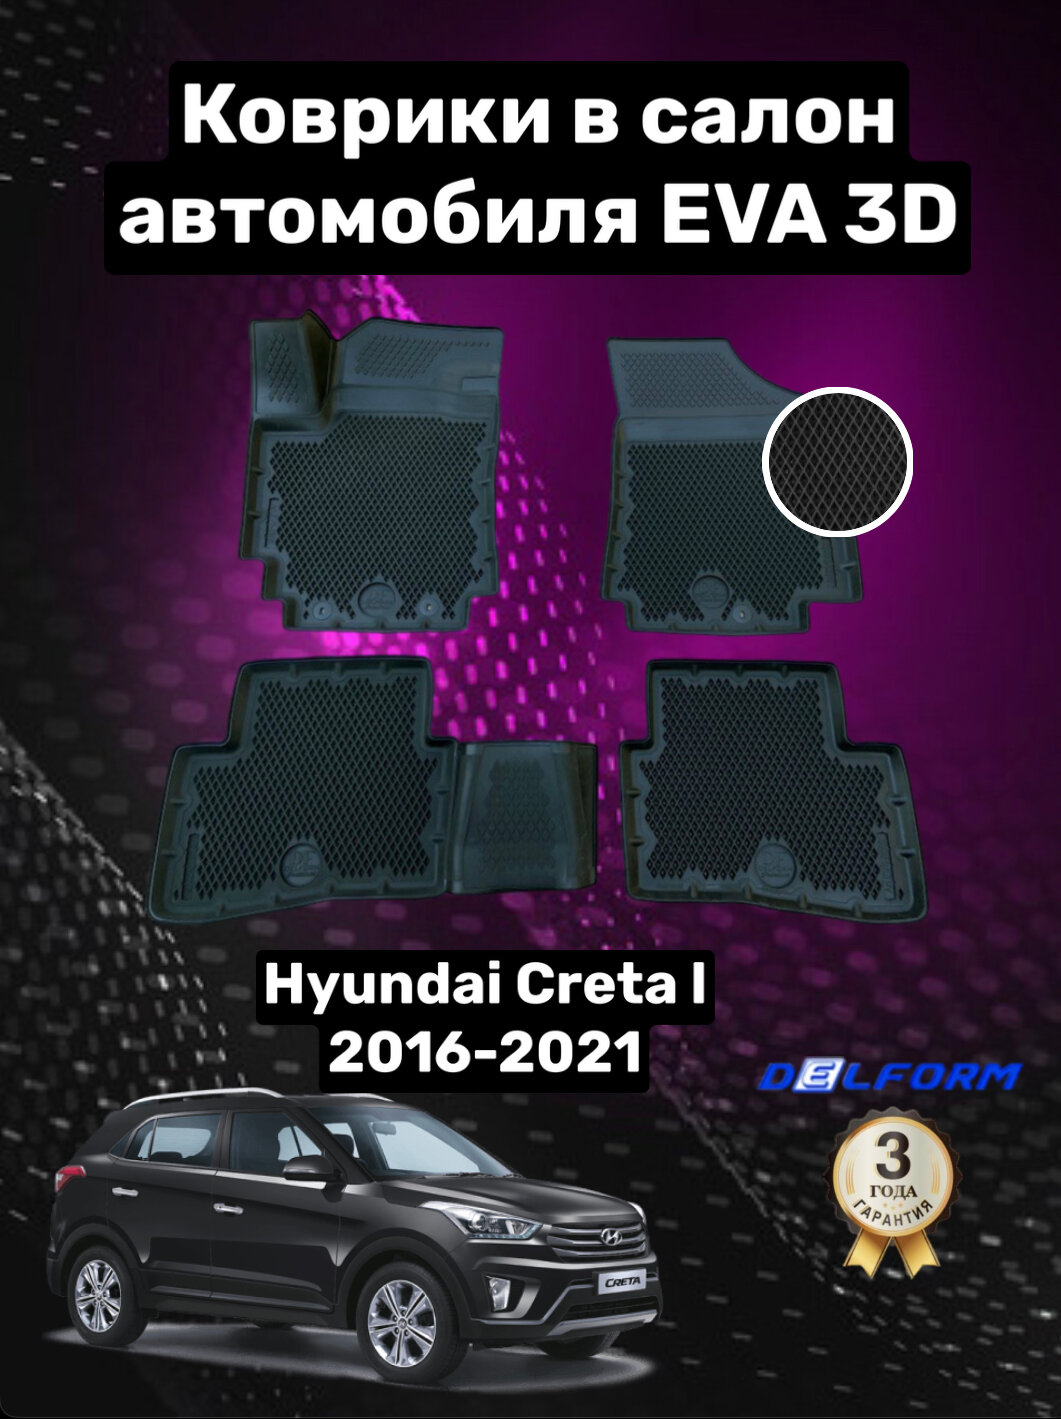 Эва/Eva/Ева коврики c бортами Хендай Крета 1 (2016-2021)/Hyundai Creta I (2016-2021) DELFORM 3D Premium ("EVA 3D") cалон